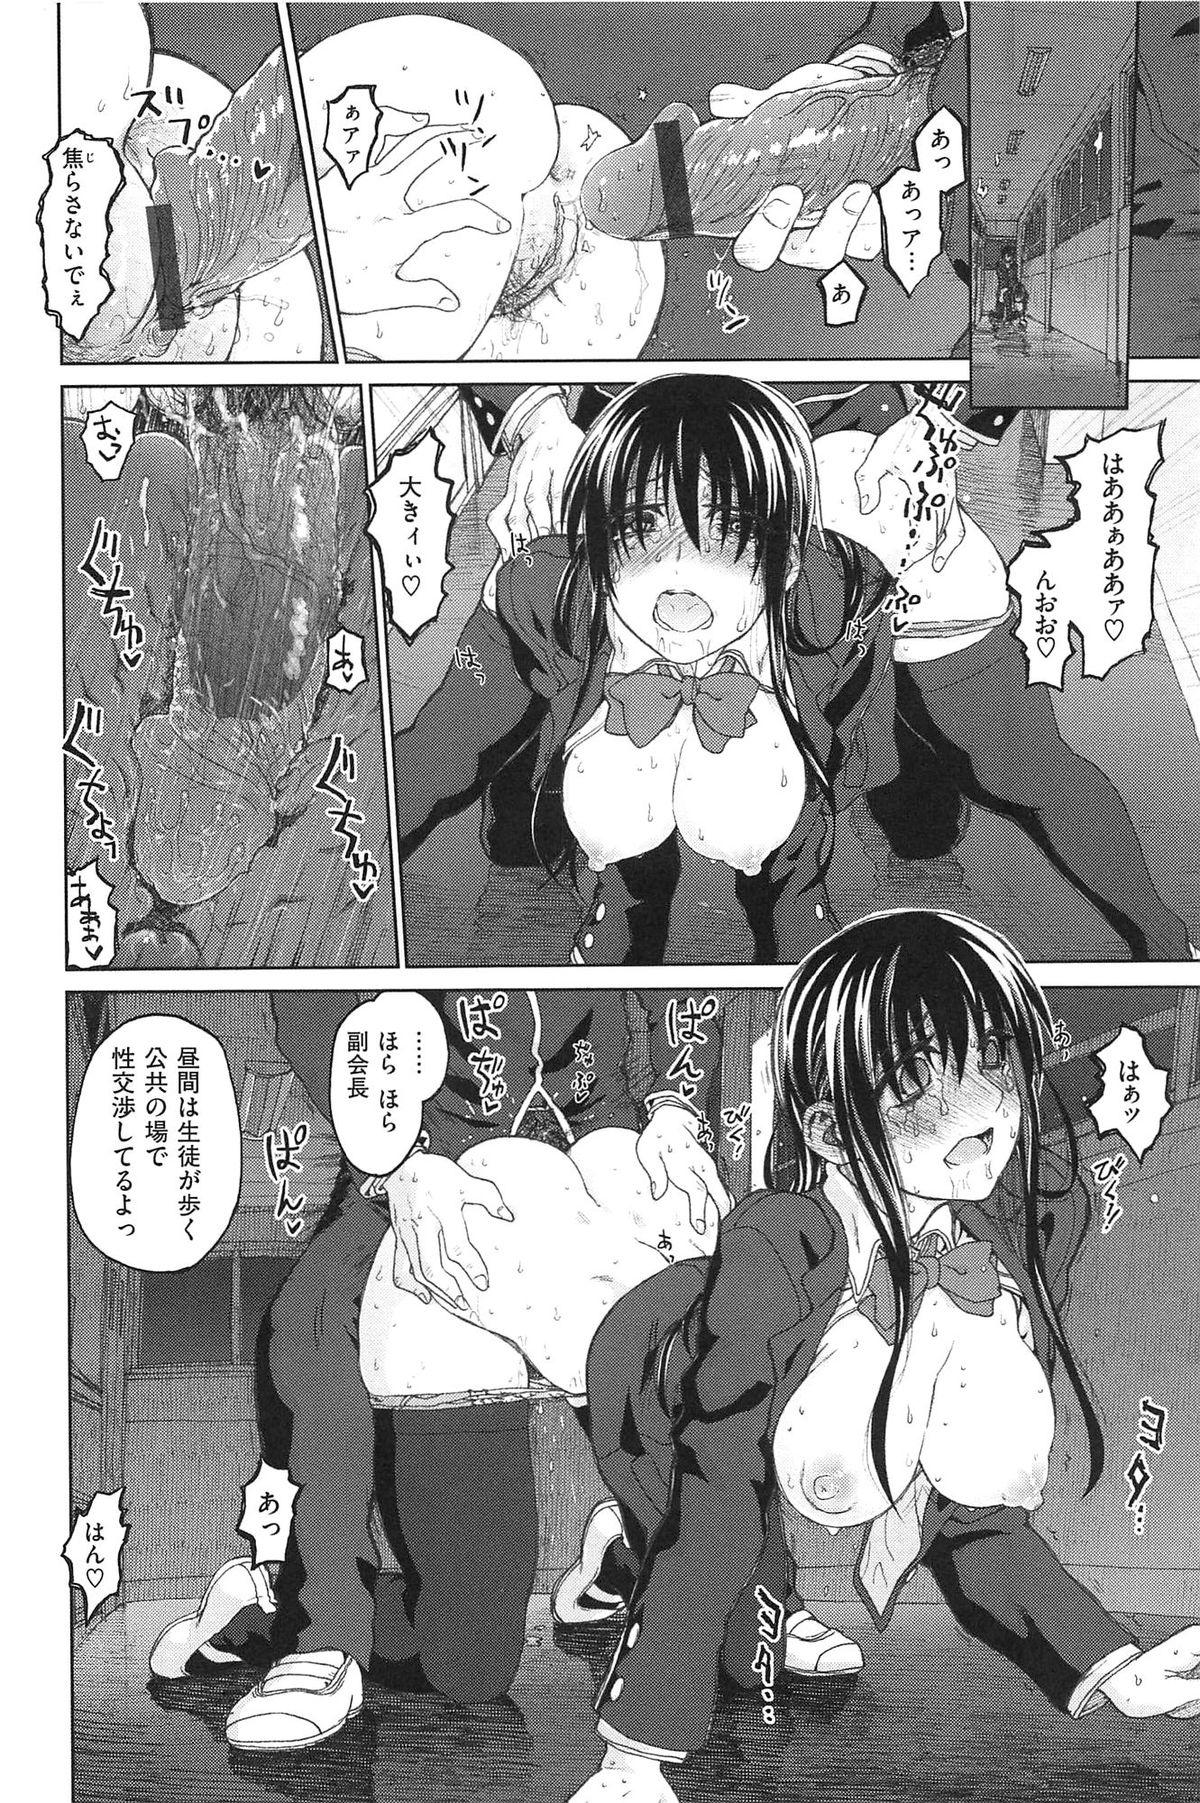 [Dagashi] Junketsu no Owaru Hibi (Beautiful Days of Losing Virginity) … (WANI MAGAZINE COMICS SPECIAL) 206